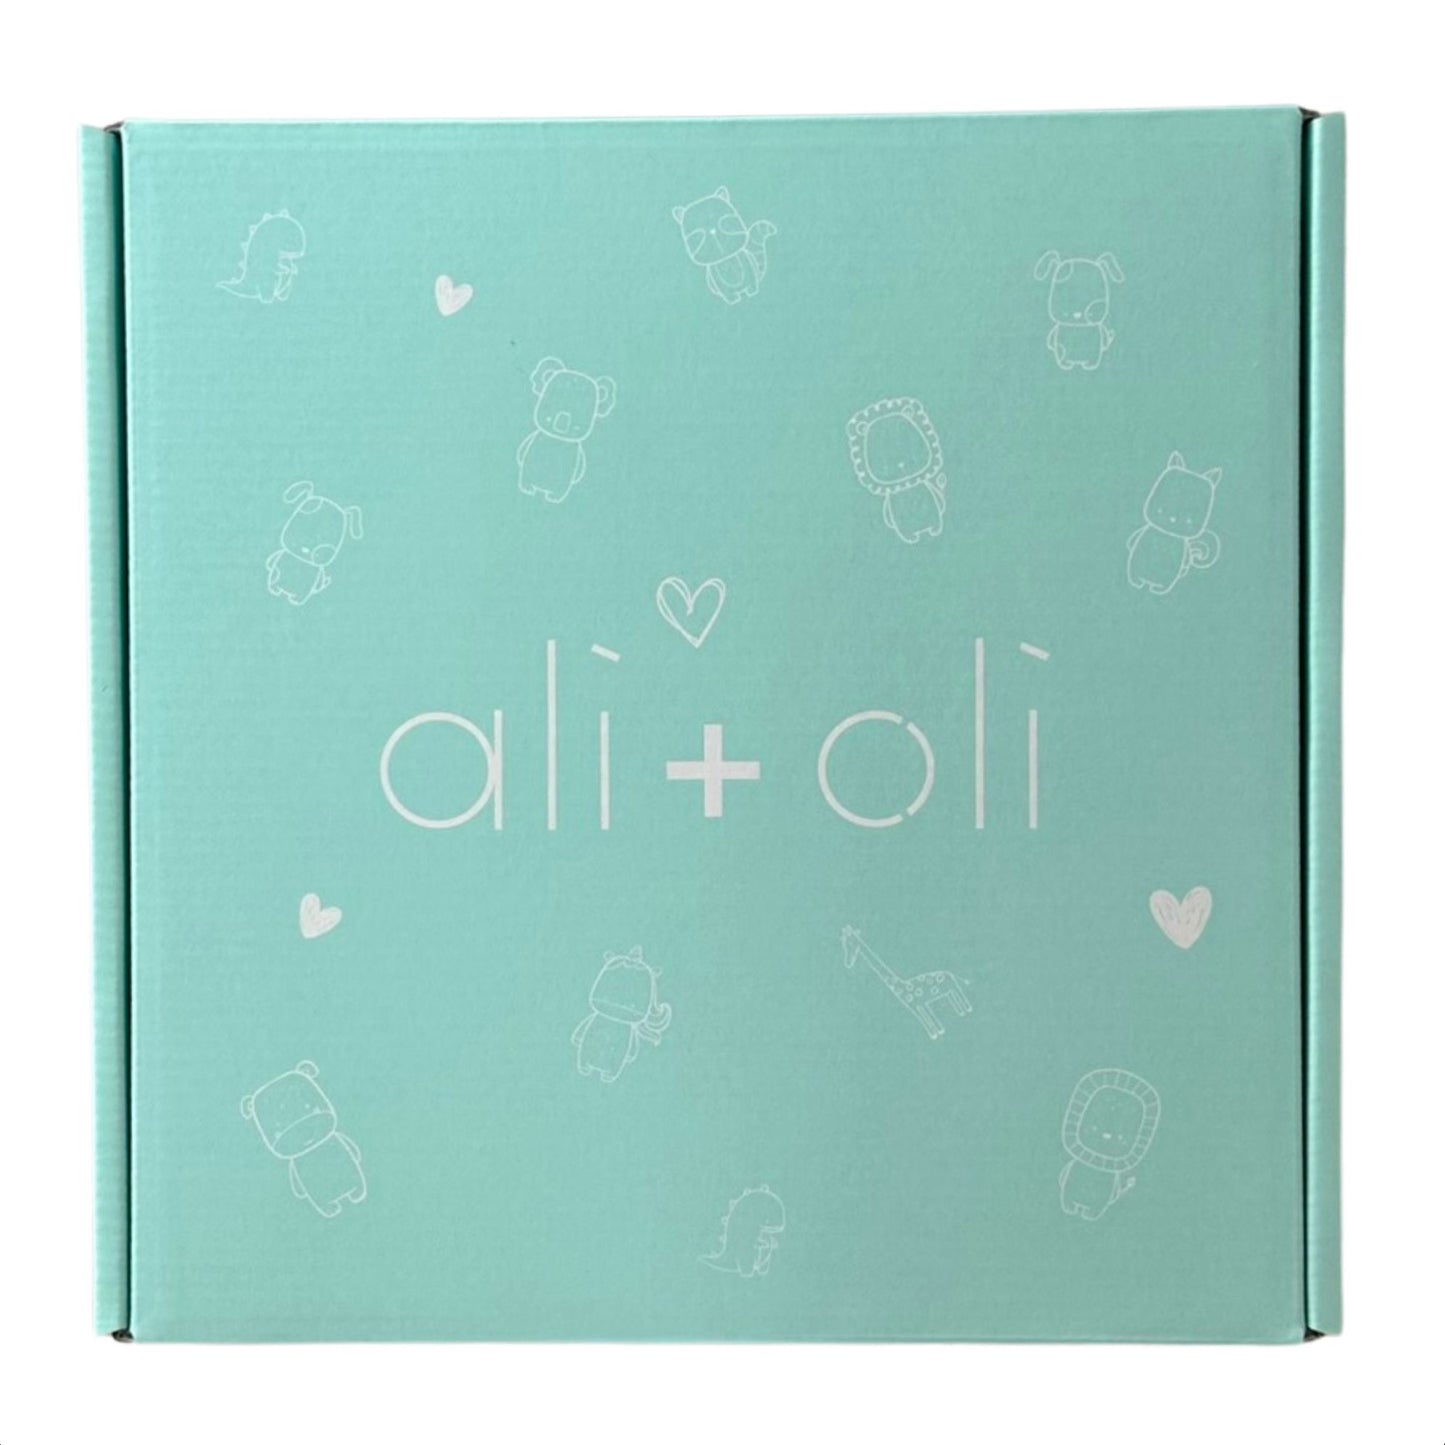 Ali+Oli Baby Gift Box - Into the Woods